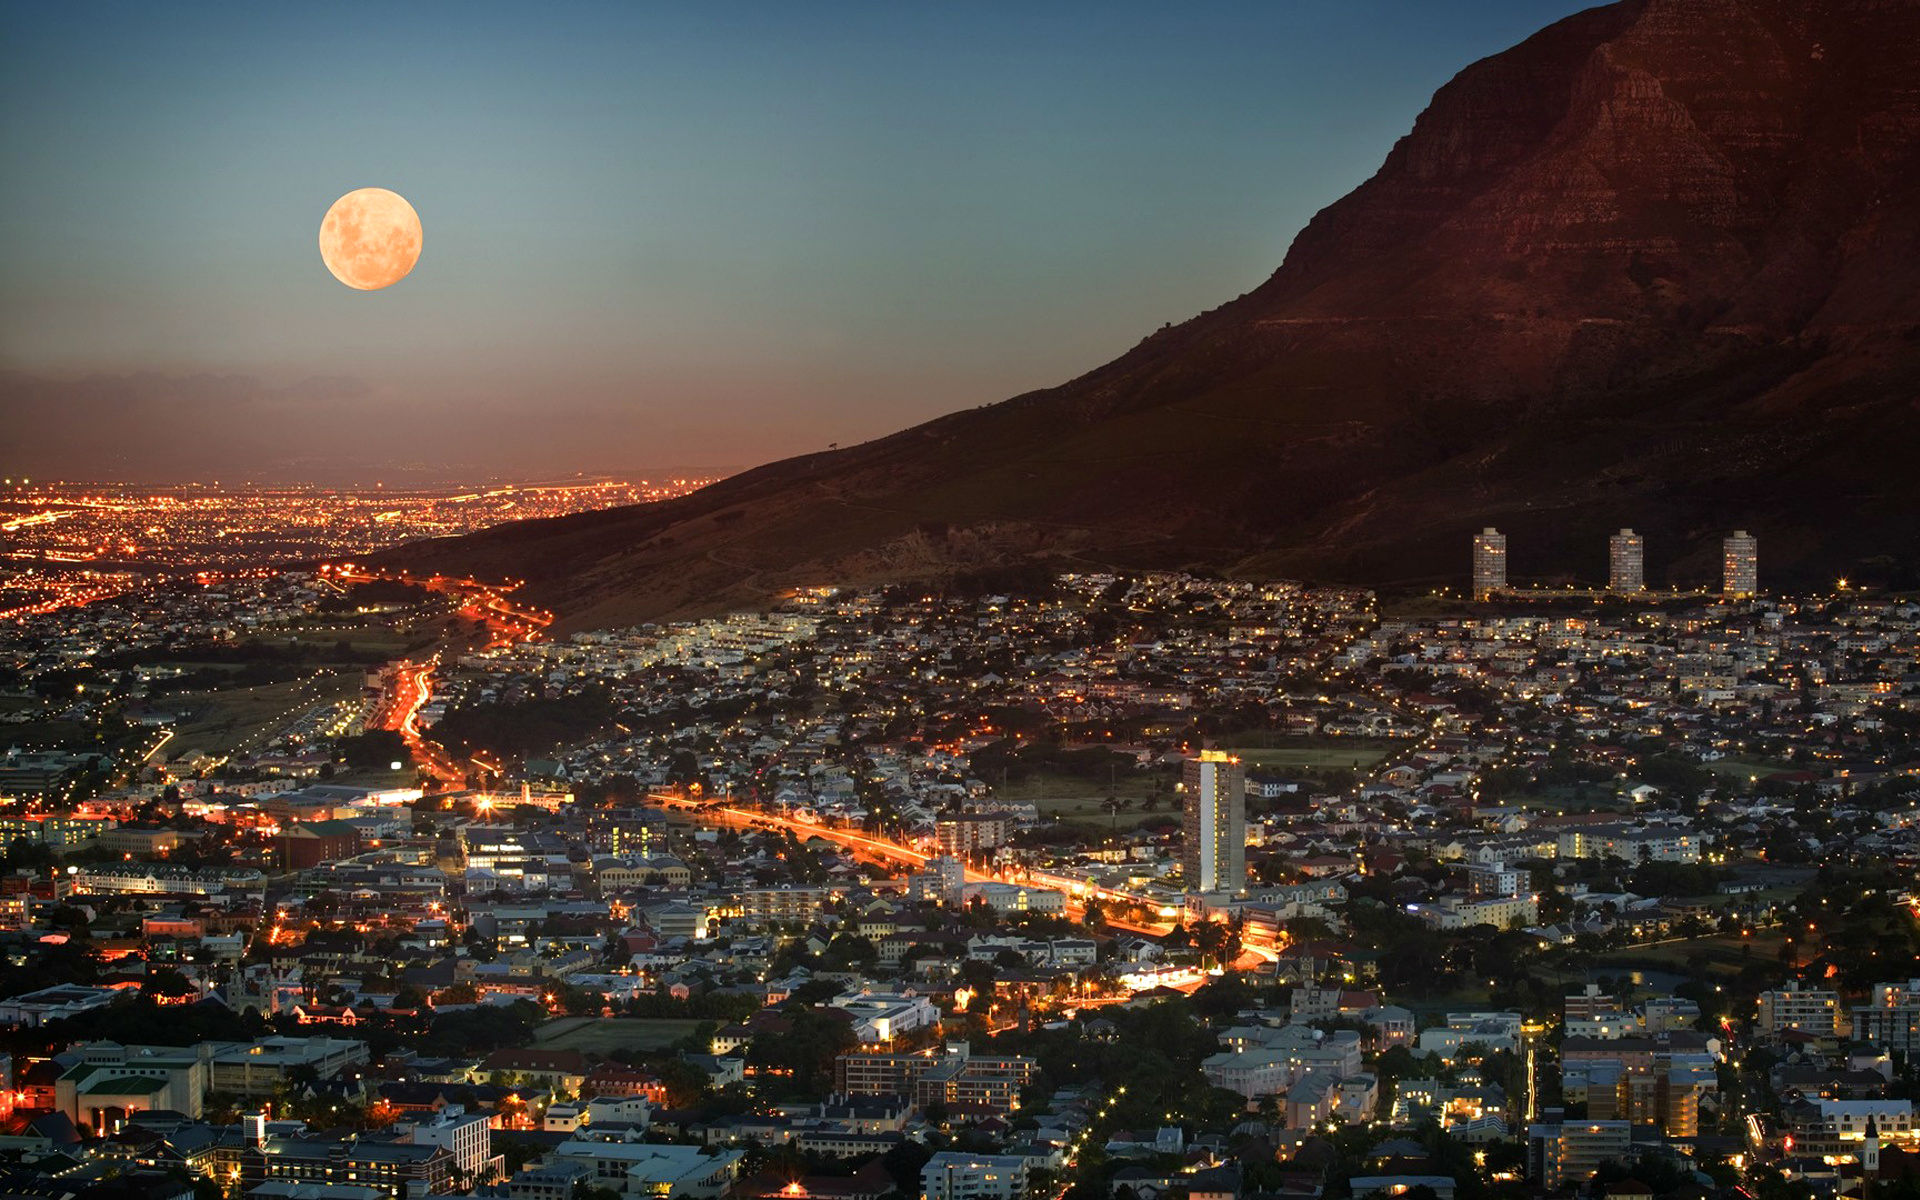 Kaapstad, South Africa